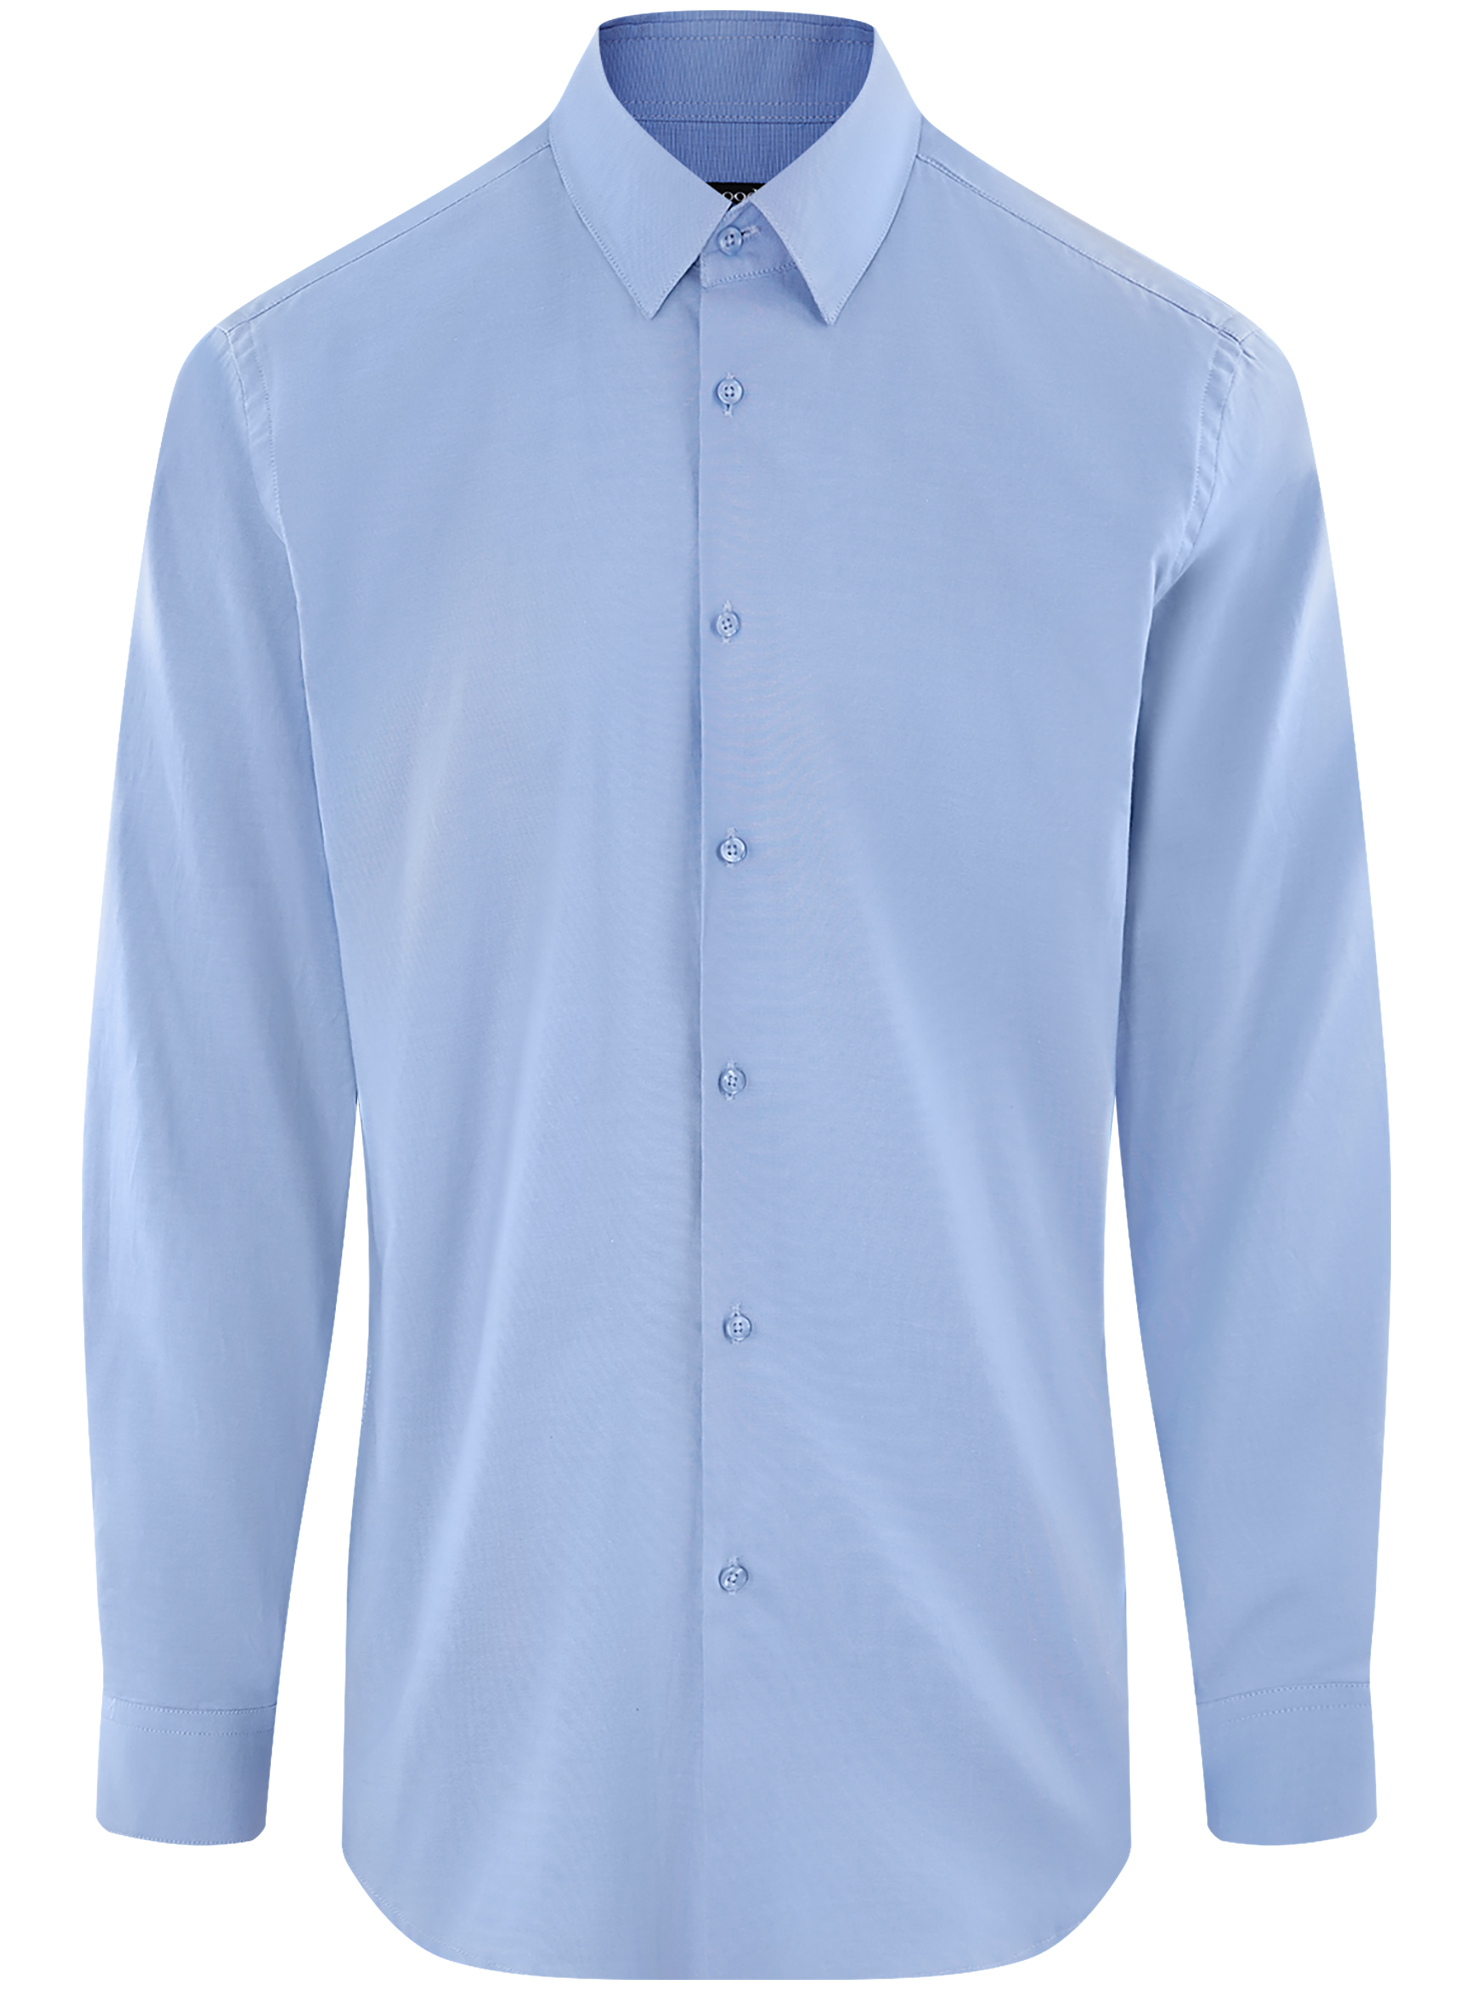 Рубашка мужская oodji 3L110421M синяя XL